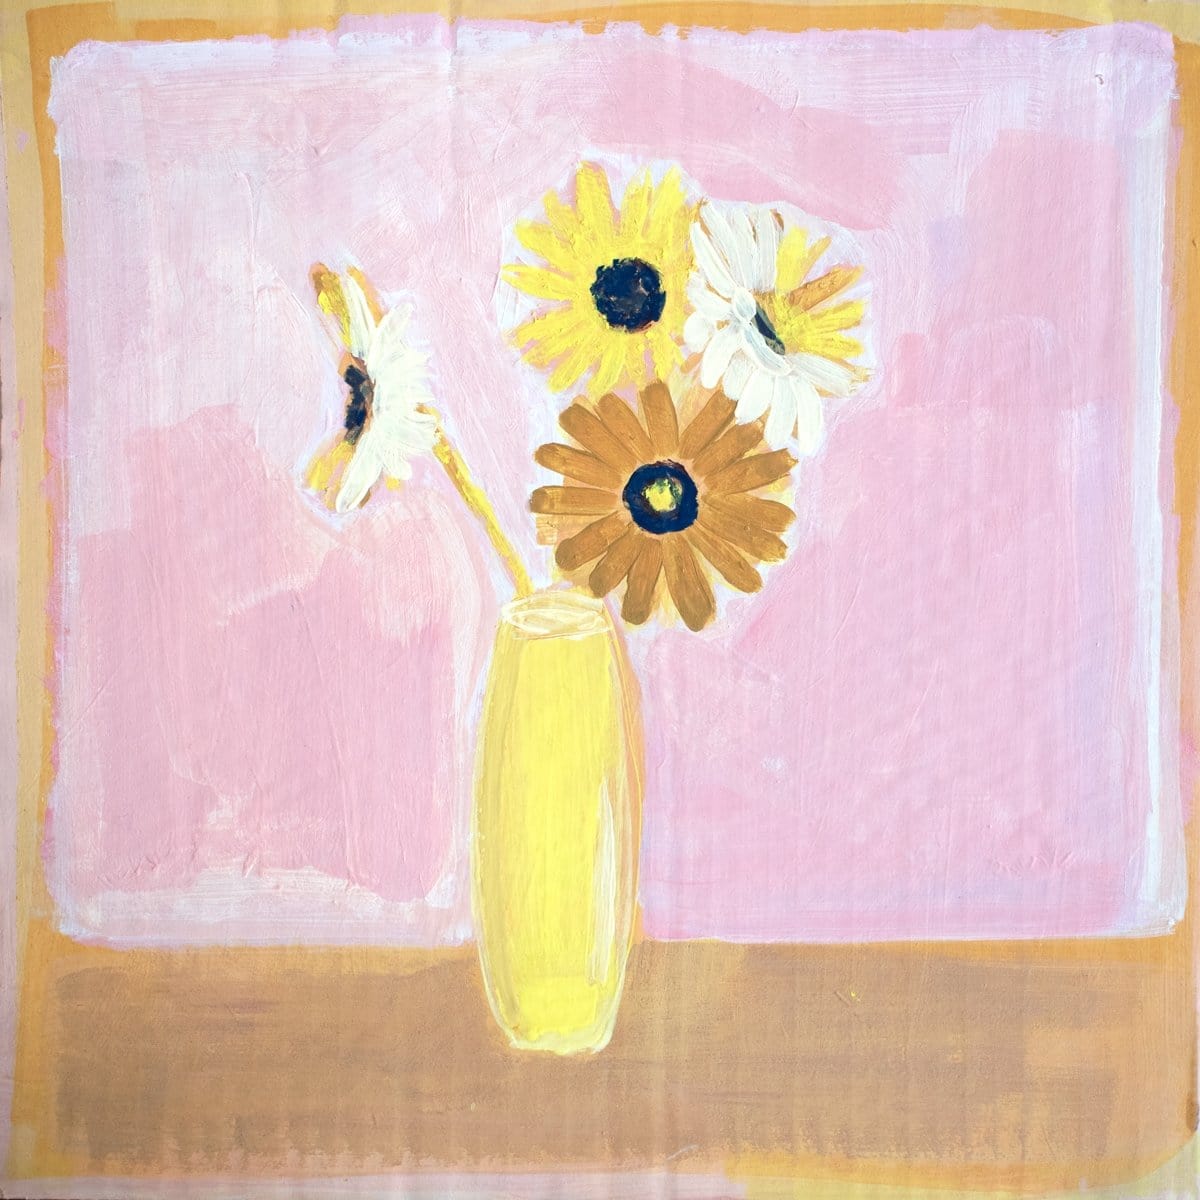 Sunflowers - Limited Edition Print-Prints-Laura Horrocks-Greenhouse Interiors